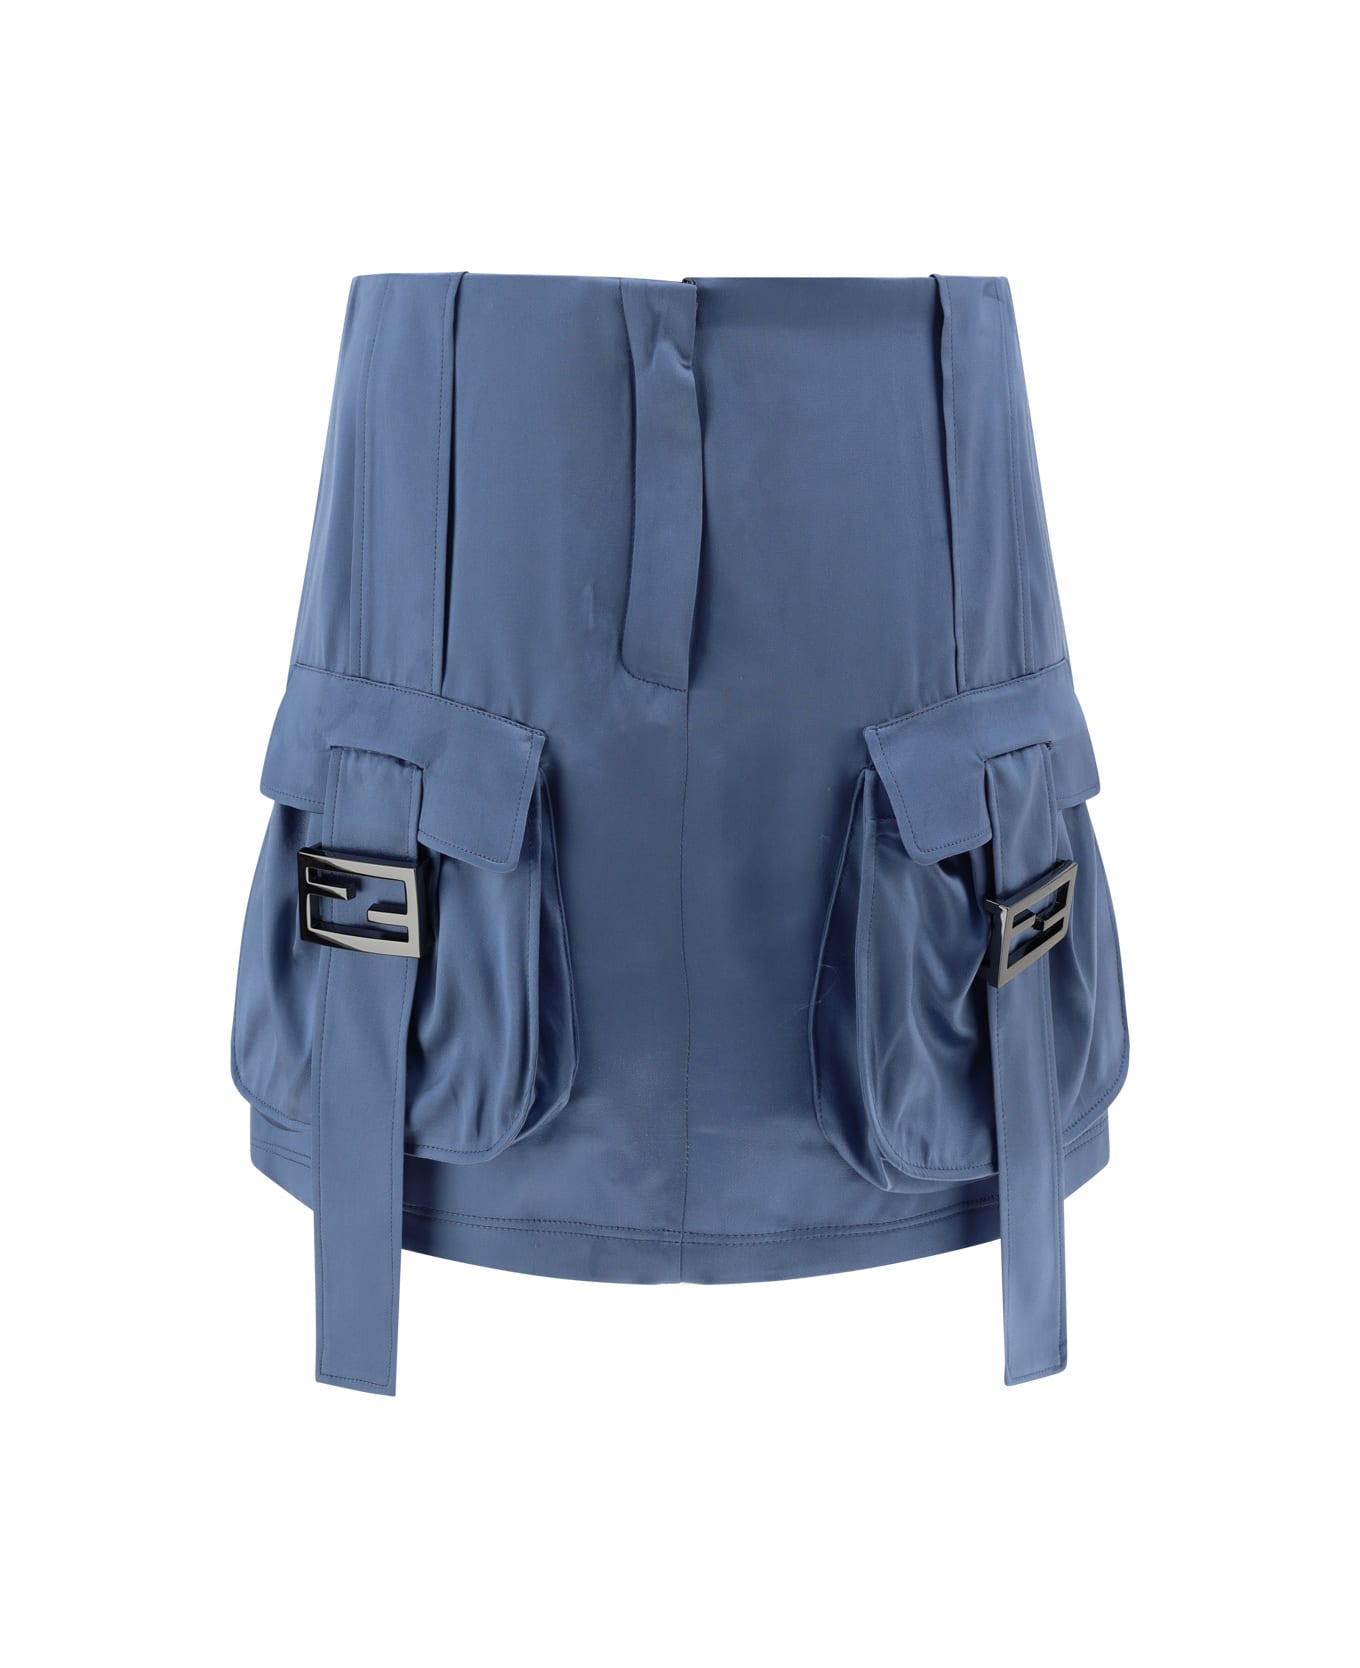 Fendi Satin Miniskirt - Perfect